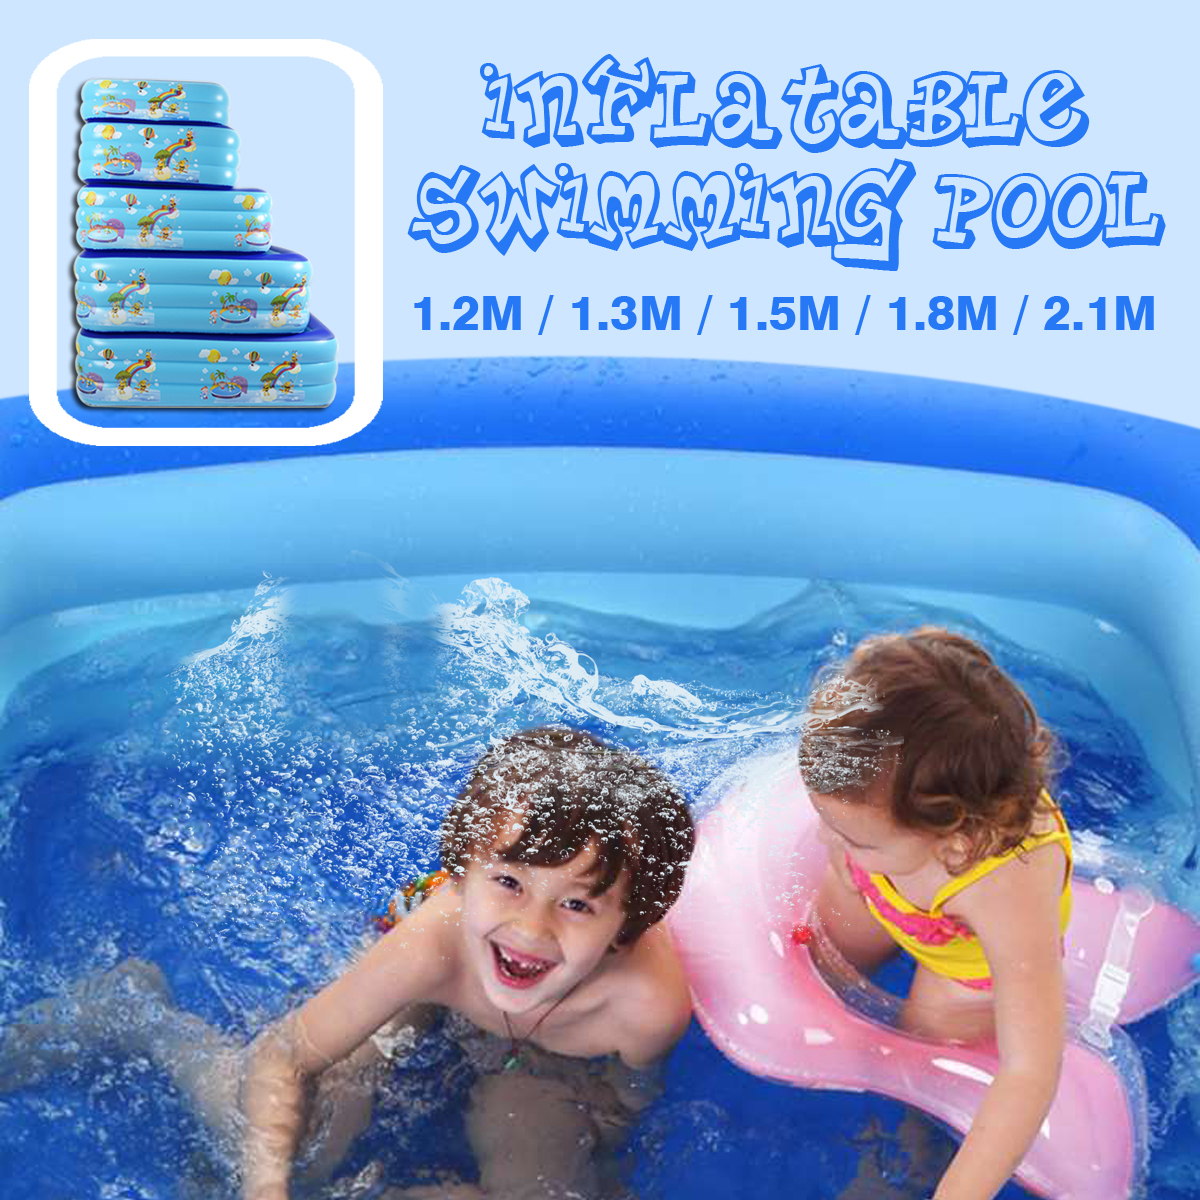 120130150180210cm-Kids-Inflatable-Swimming-Pool-Indoor-Home-For-Children-Swim-1674805-3